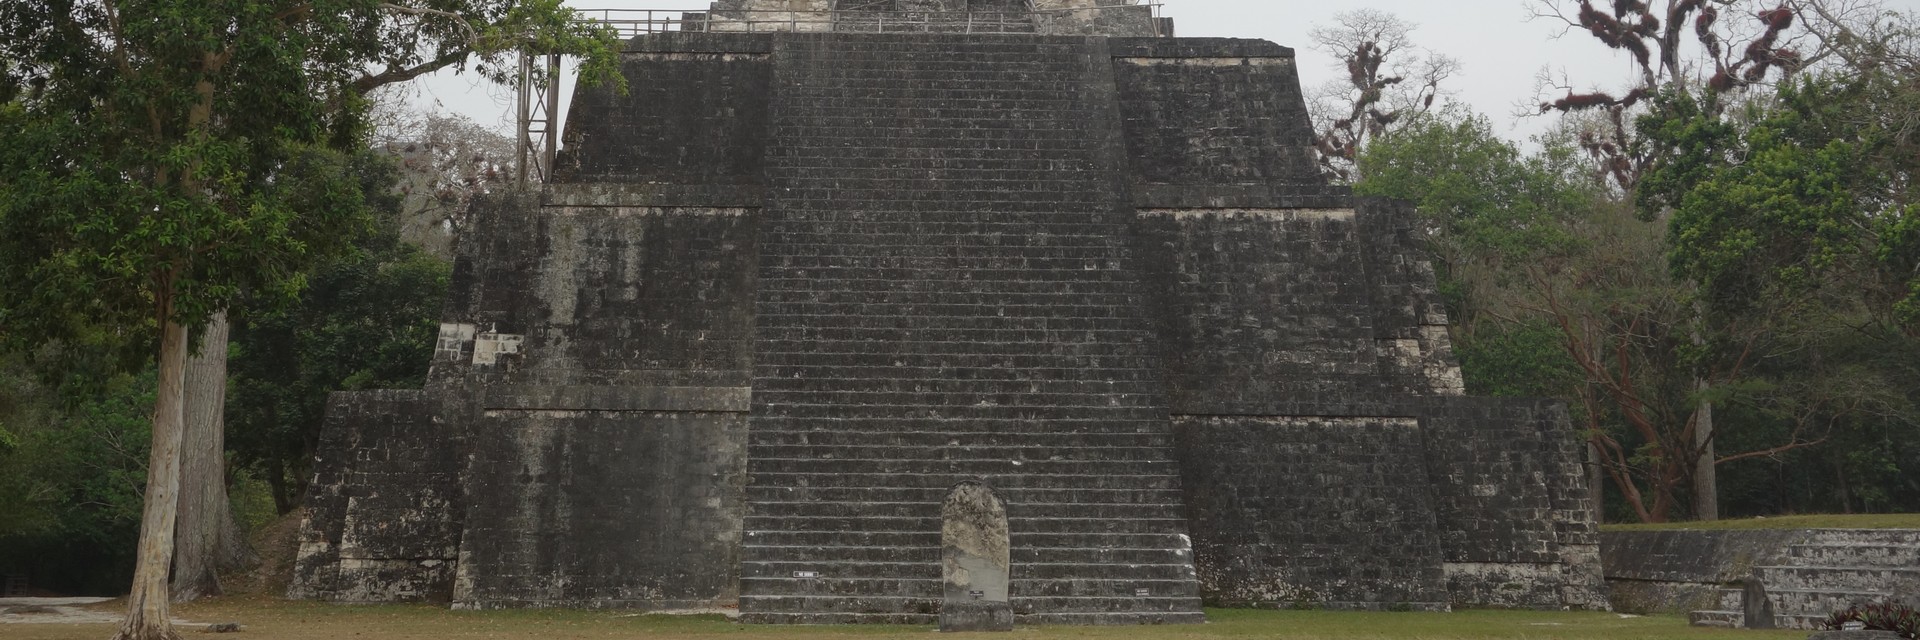 Tikal3